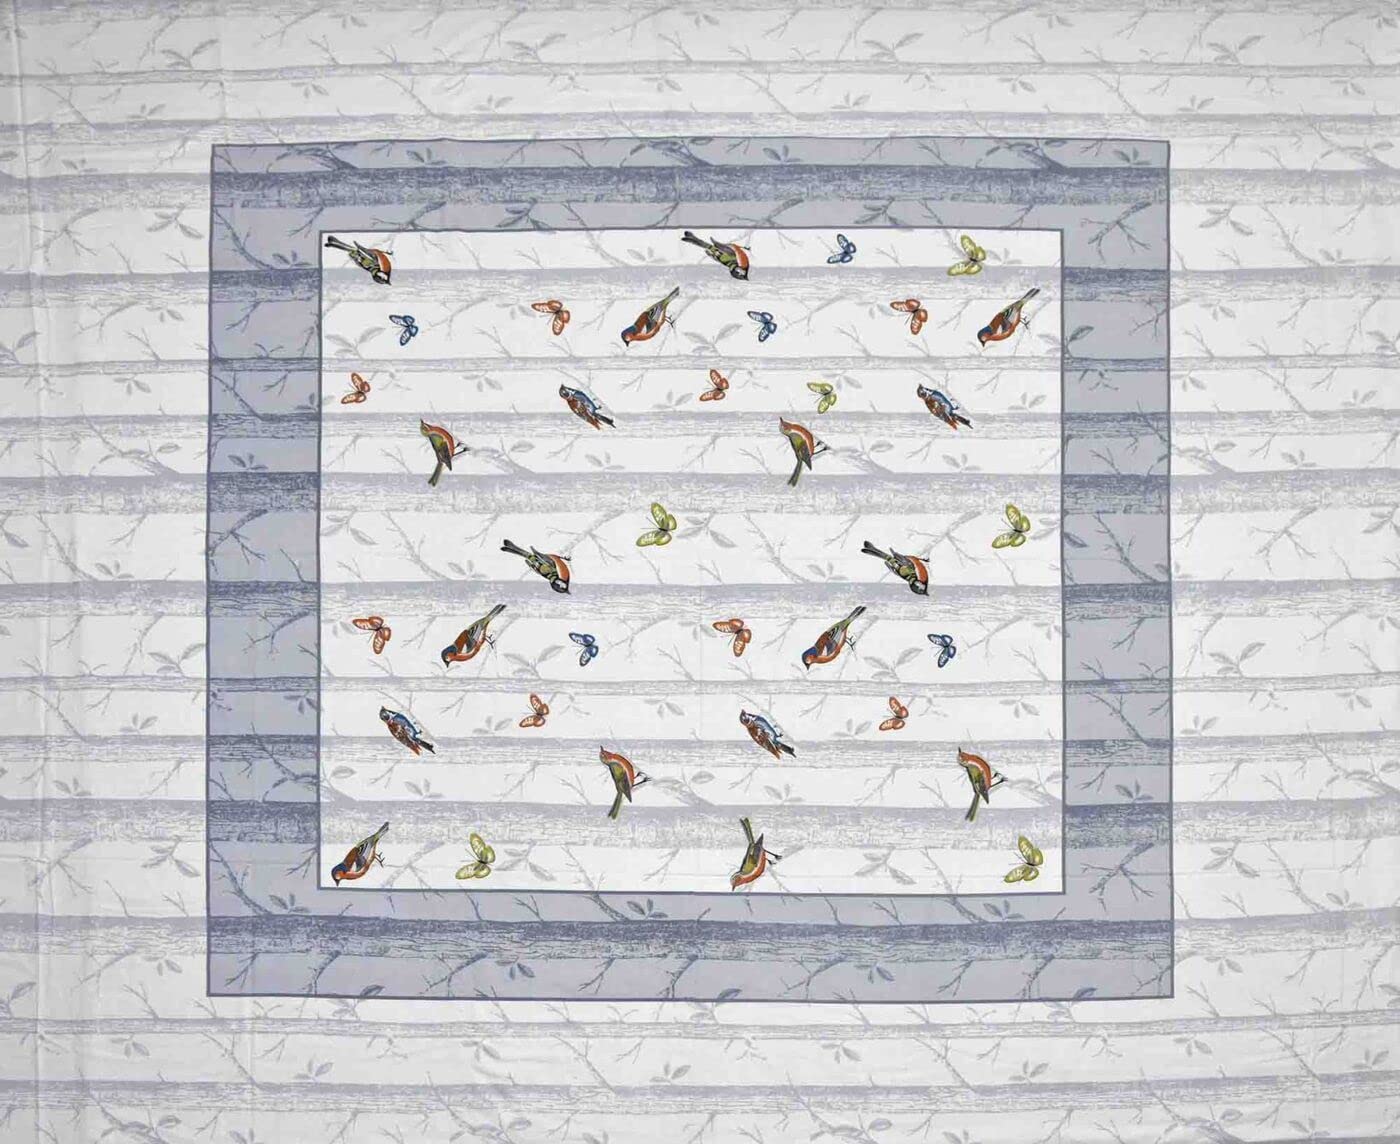 Alexa Bird Pattern Grey Sparrow  King Size Double Bedsheet